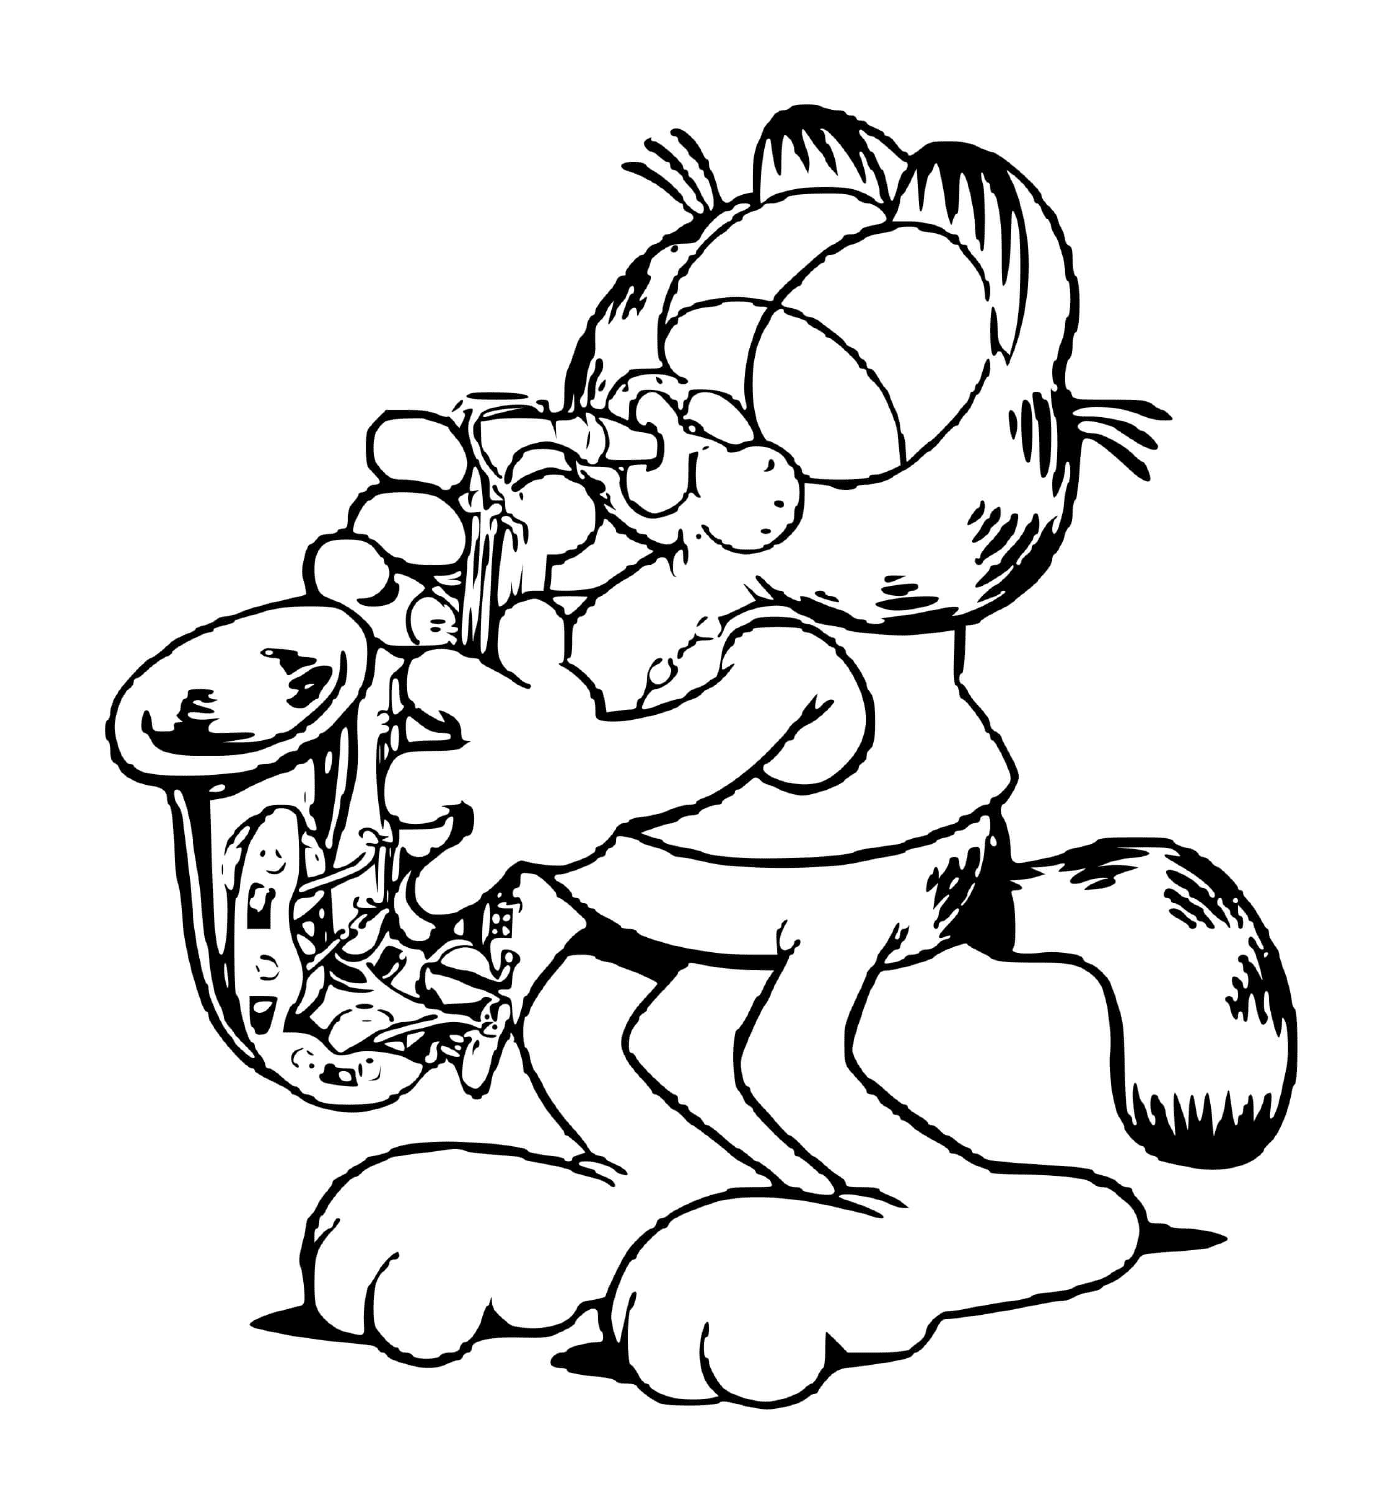 Garfield joue du saxophone